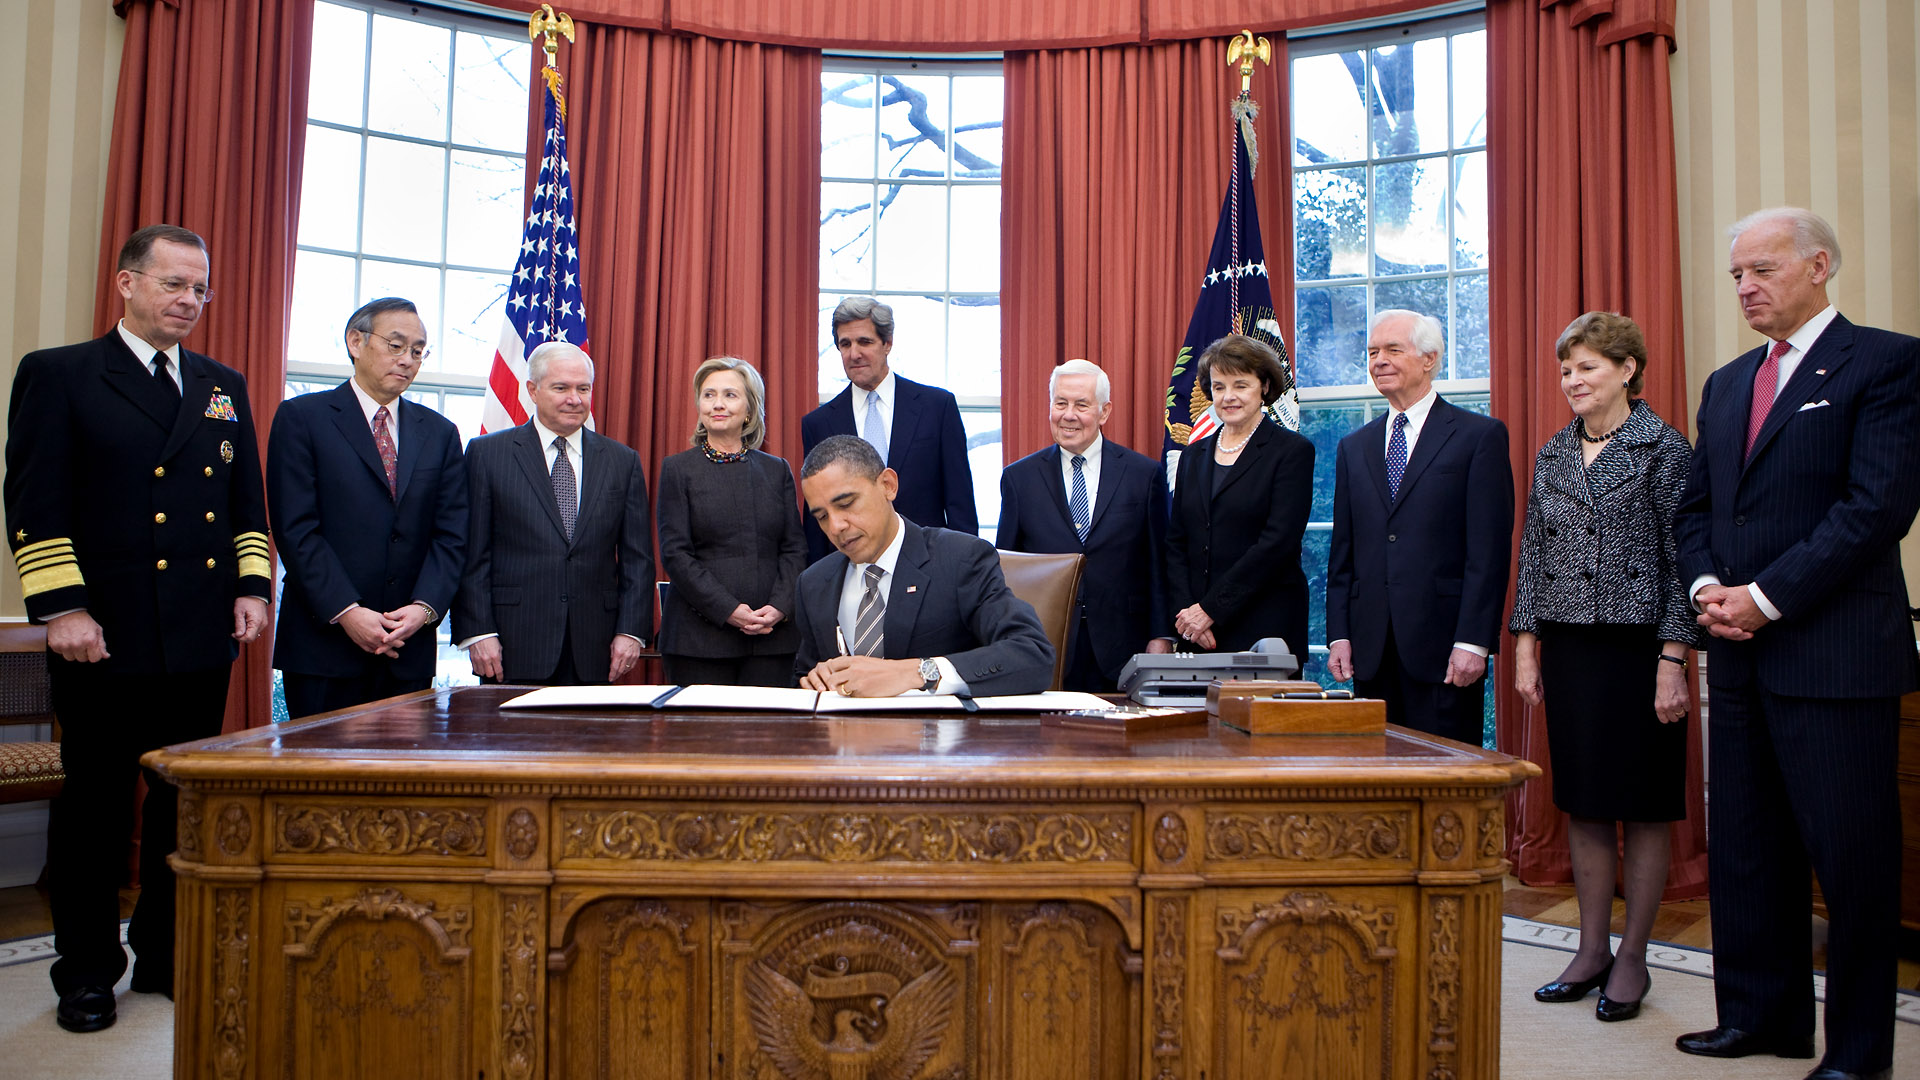 President Obama Signs the New START Treaty